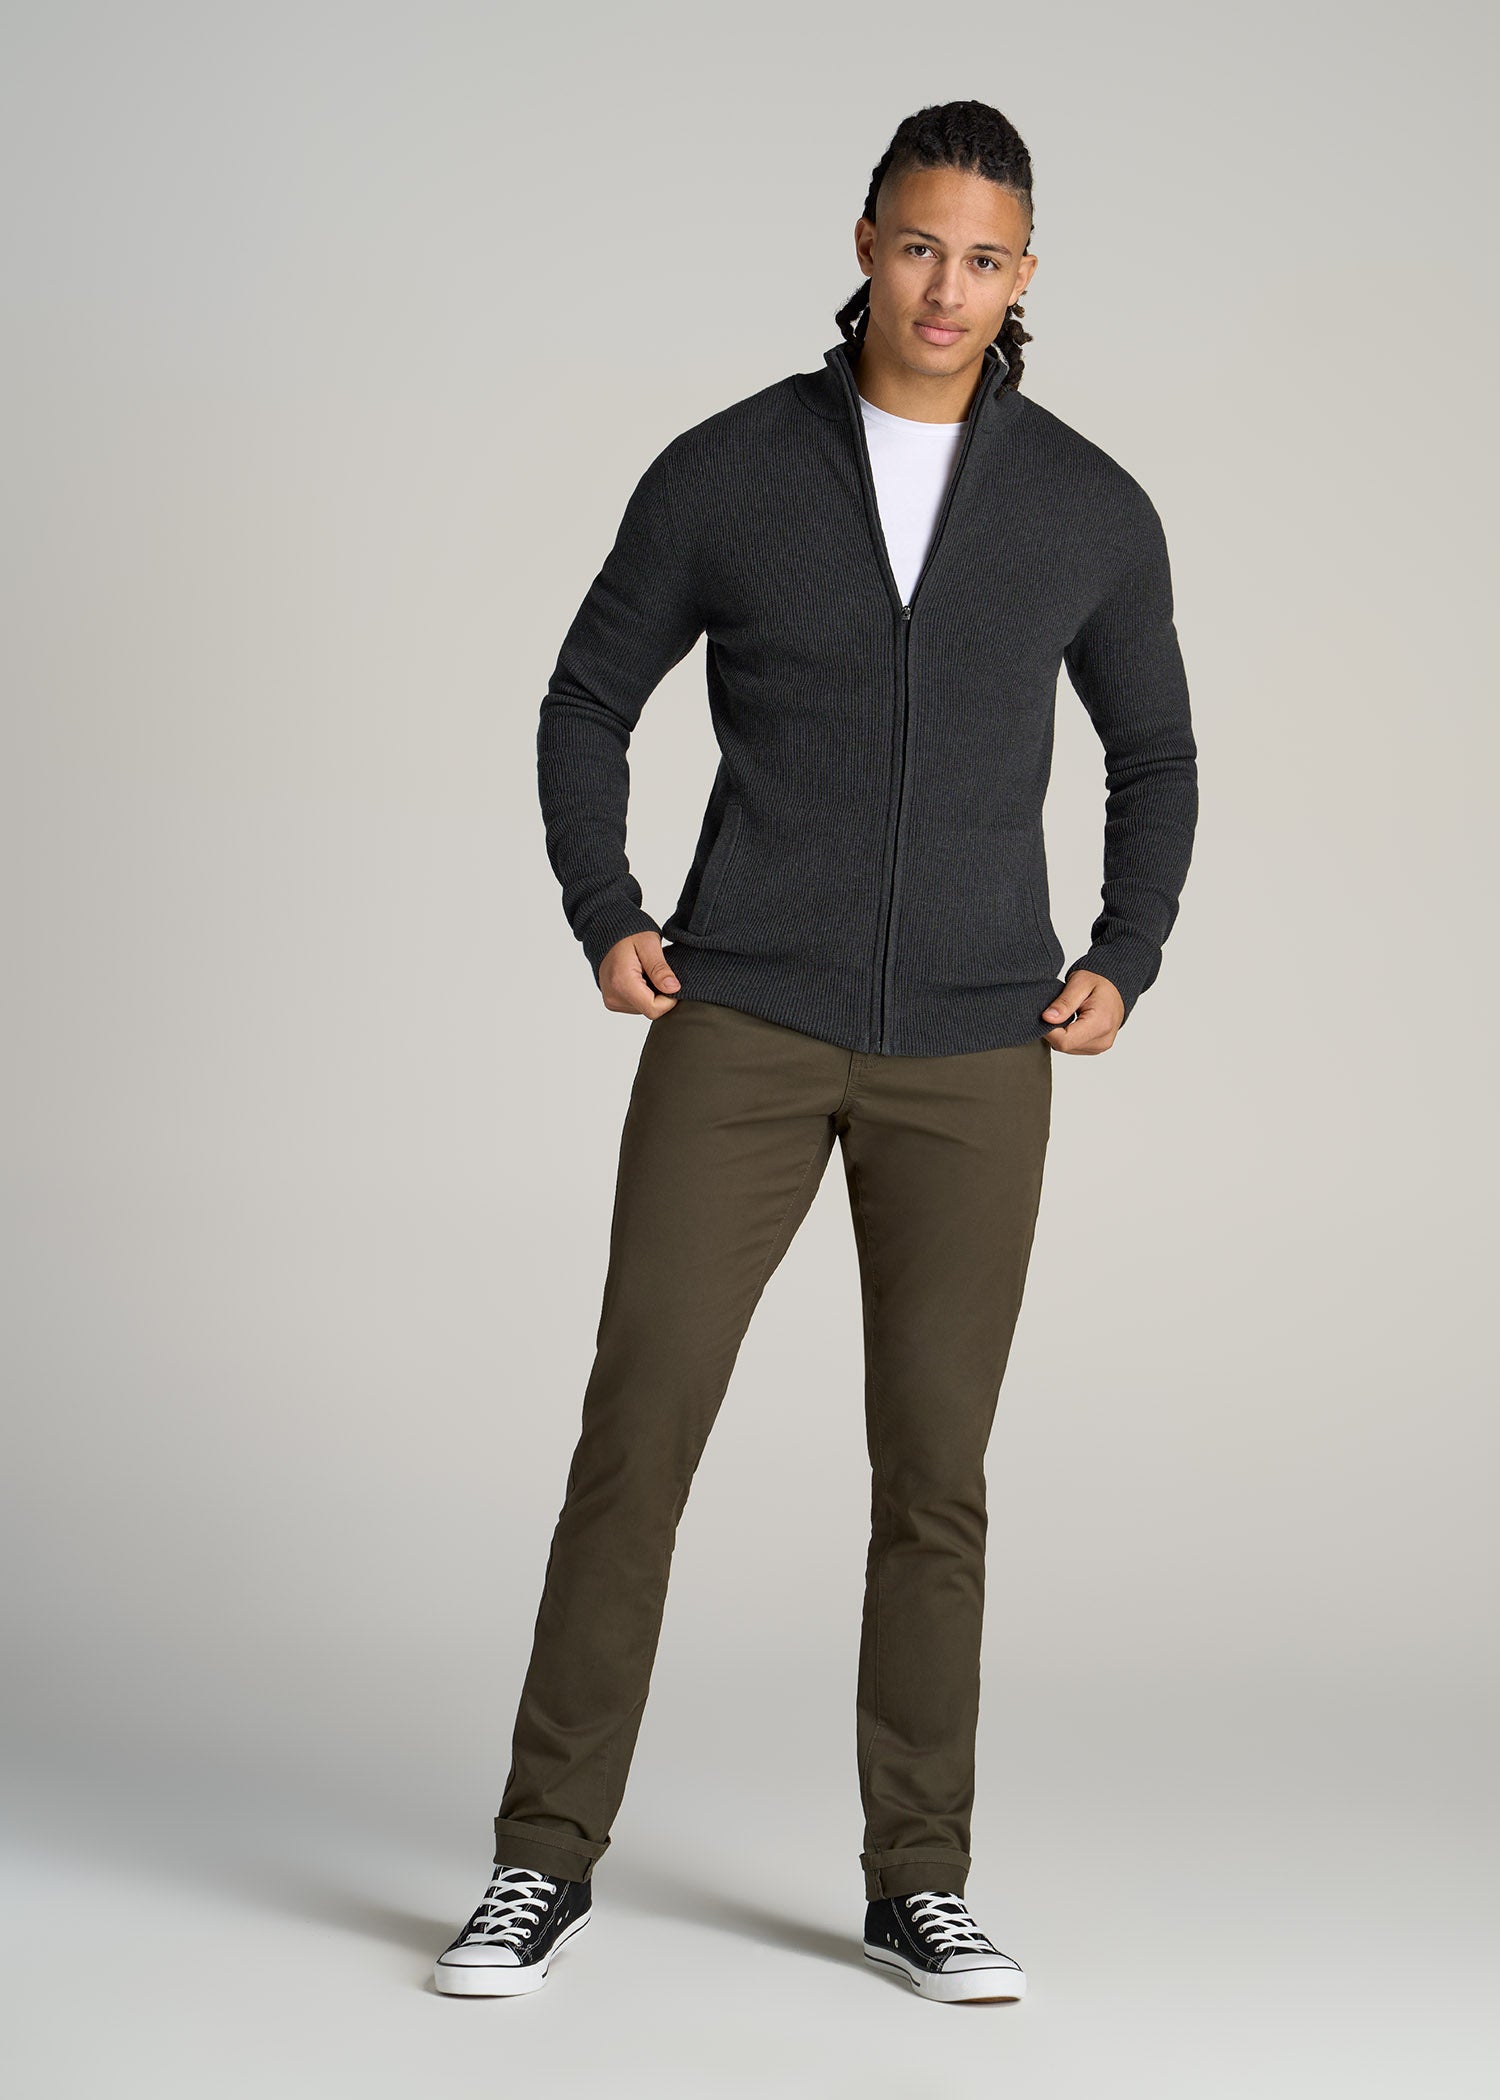         American-Tall-Men-Full-Zip-Sweater-Charcoal-Mix-full